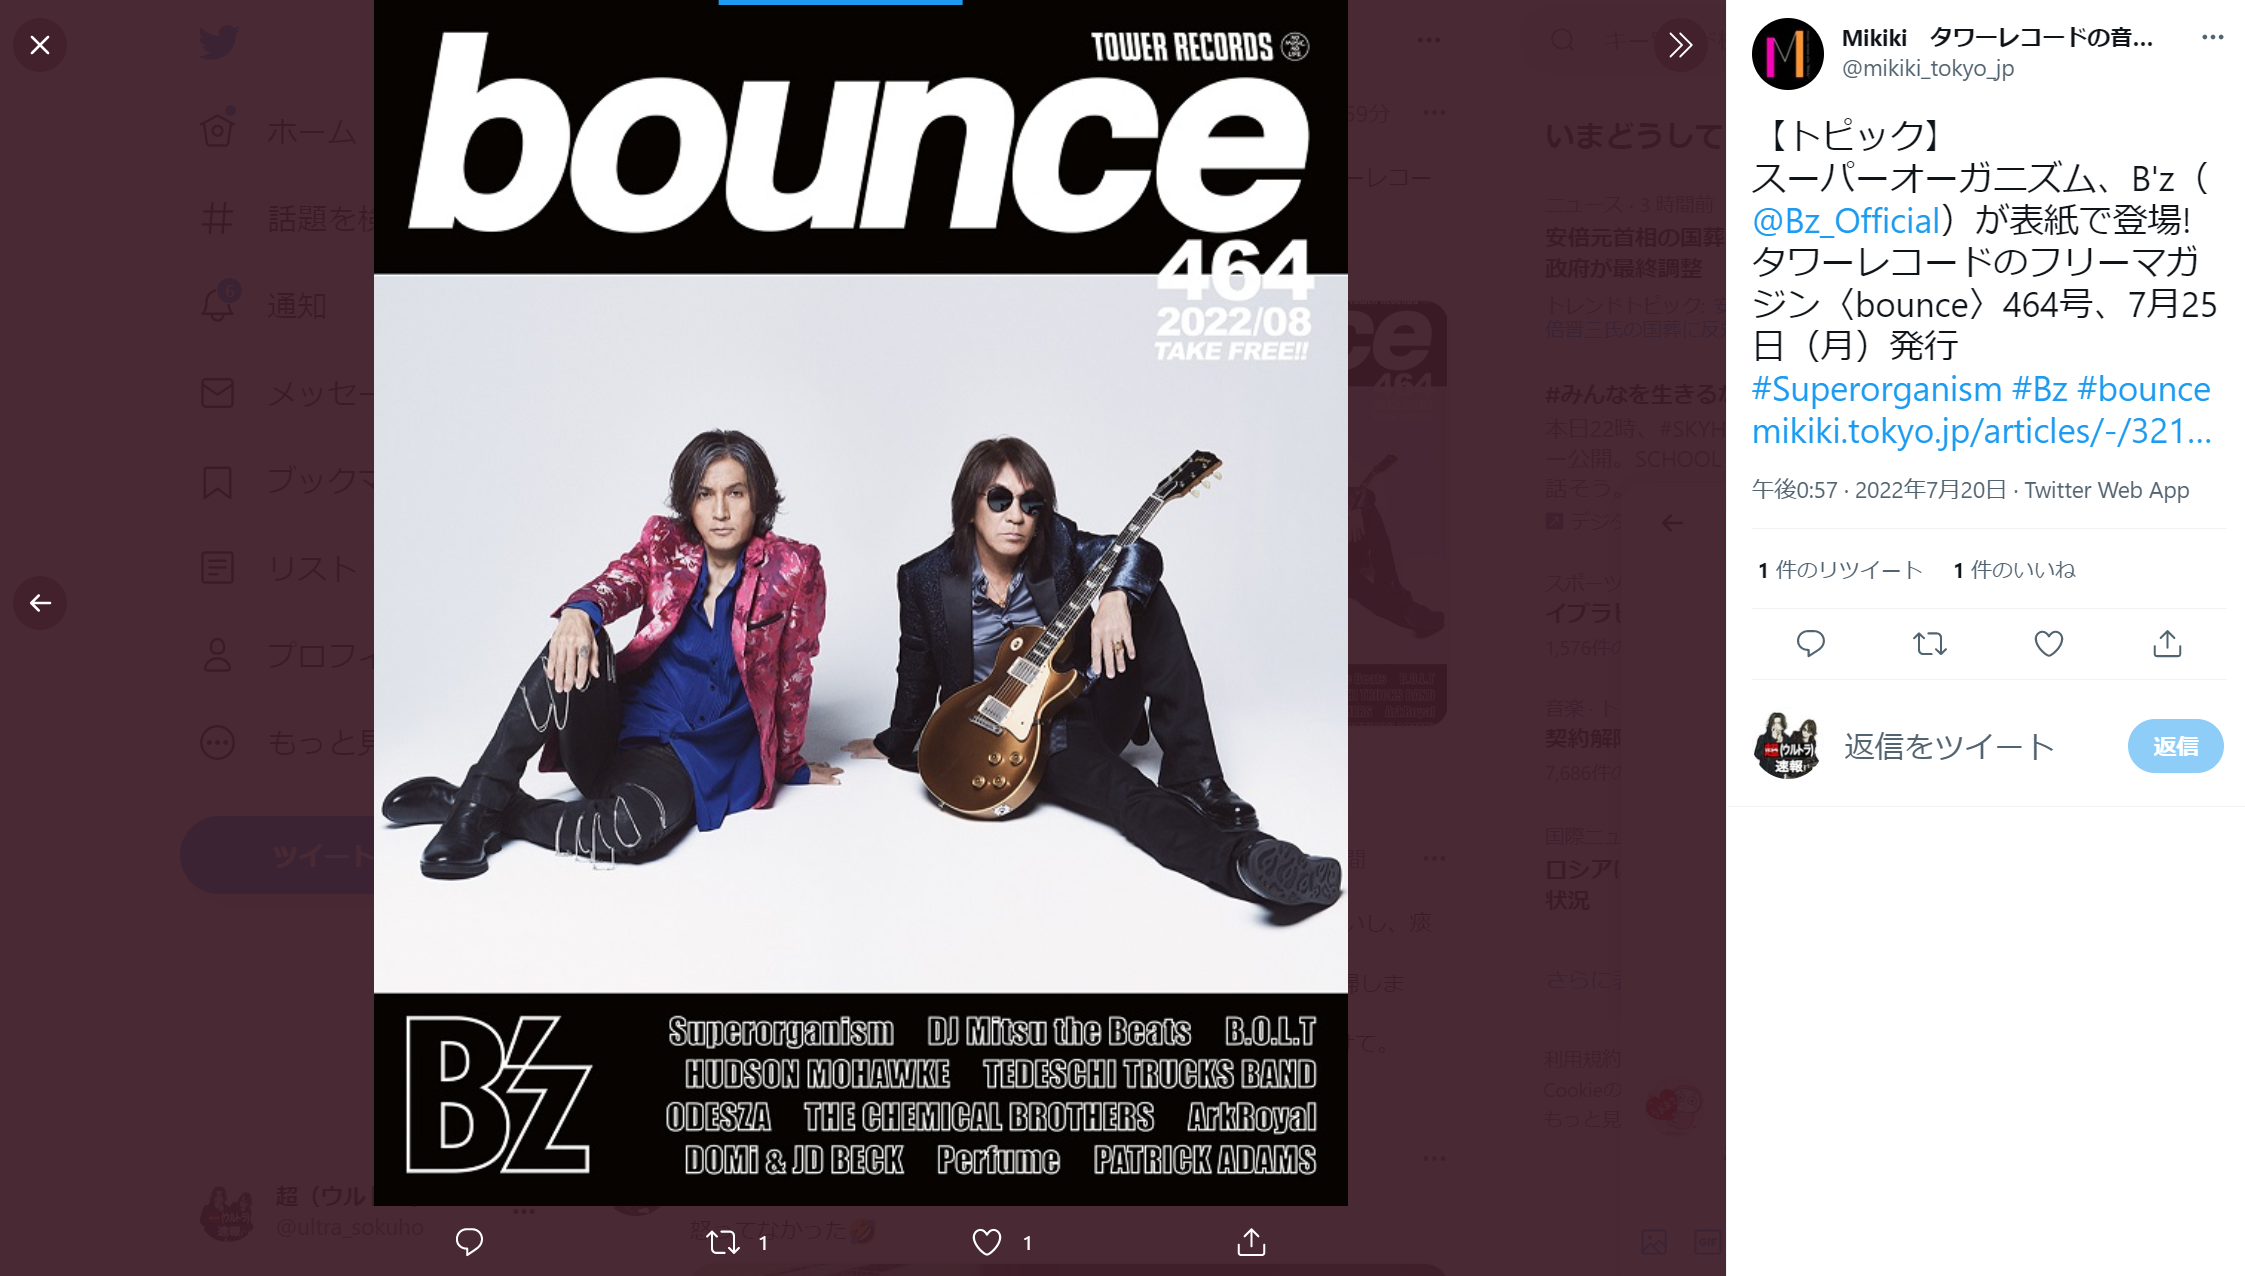 『bounce』464号のB'zが登場する表紙のキャプチャ画像